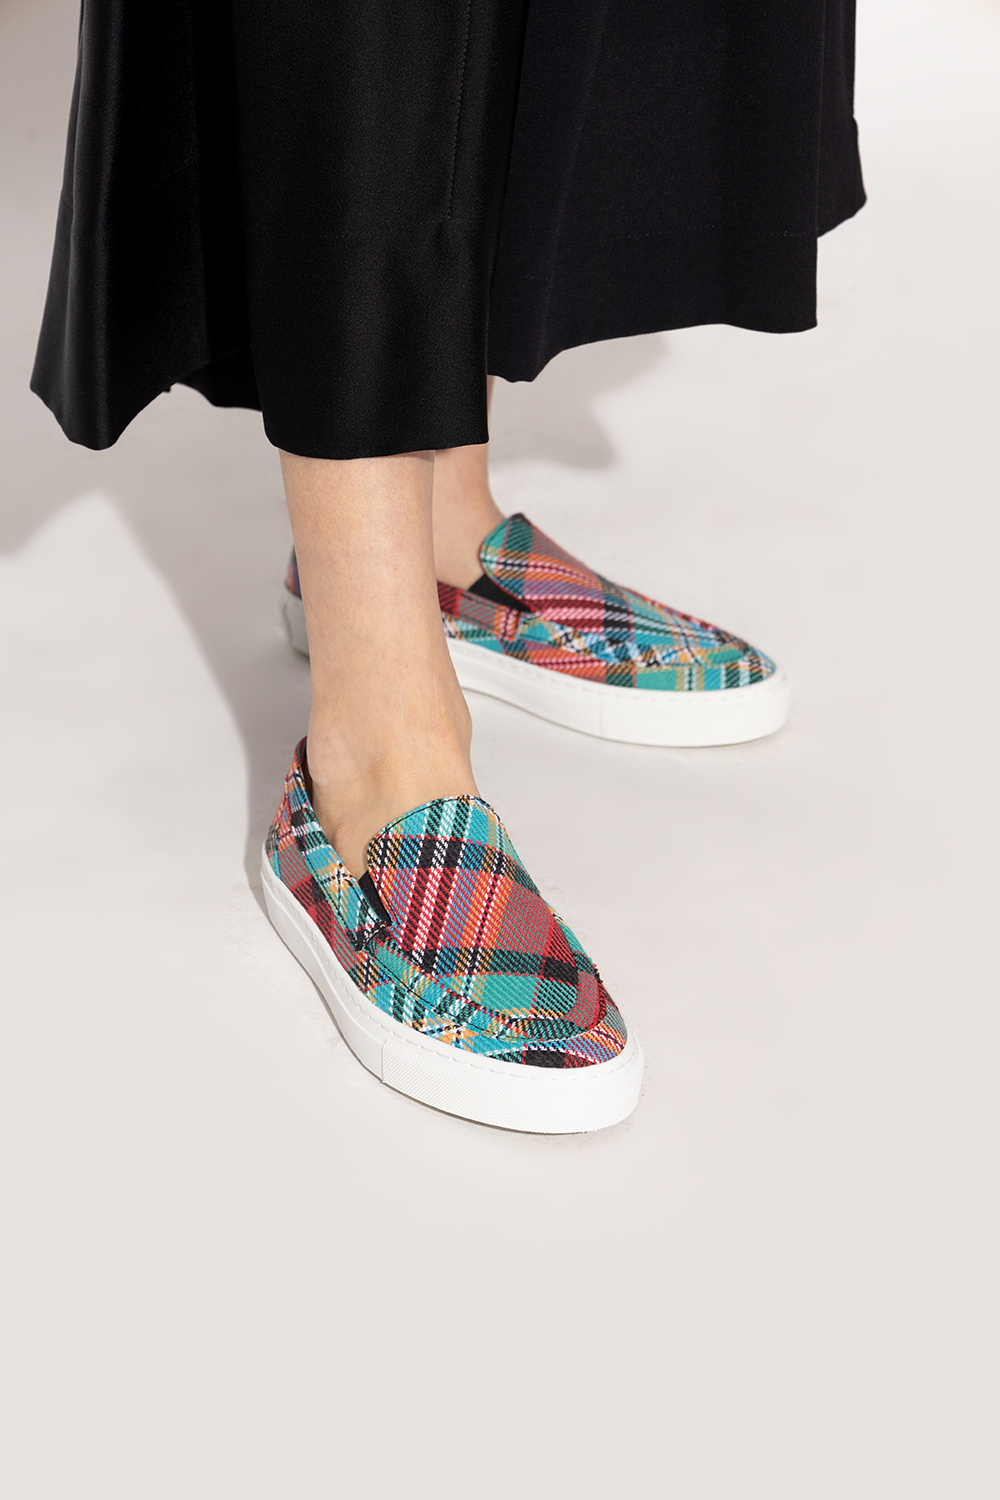 Vivienne Westwood Slip-on shoes